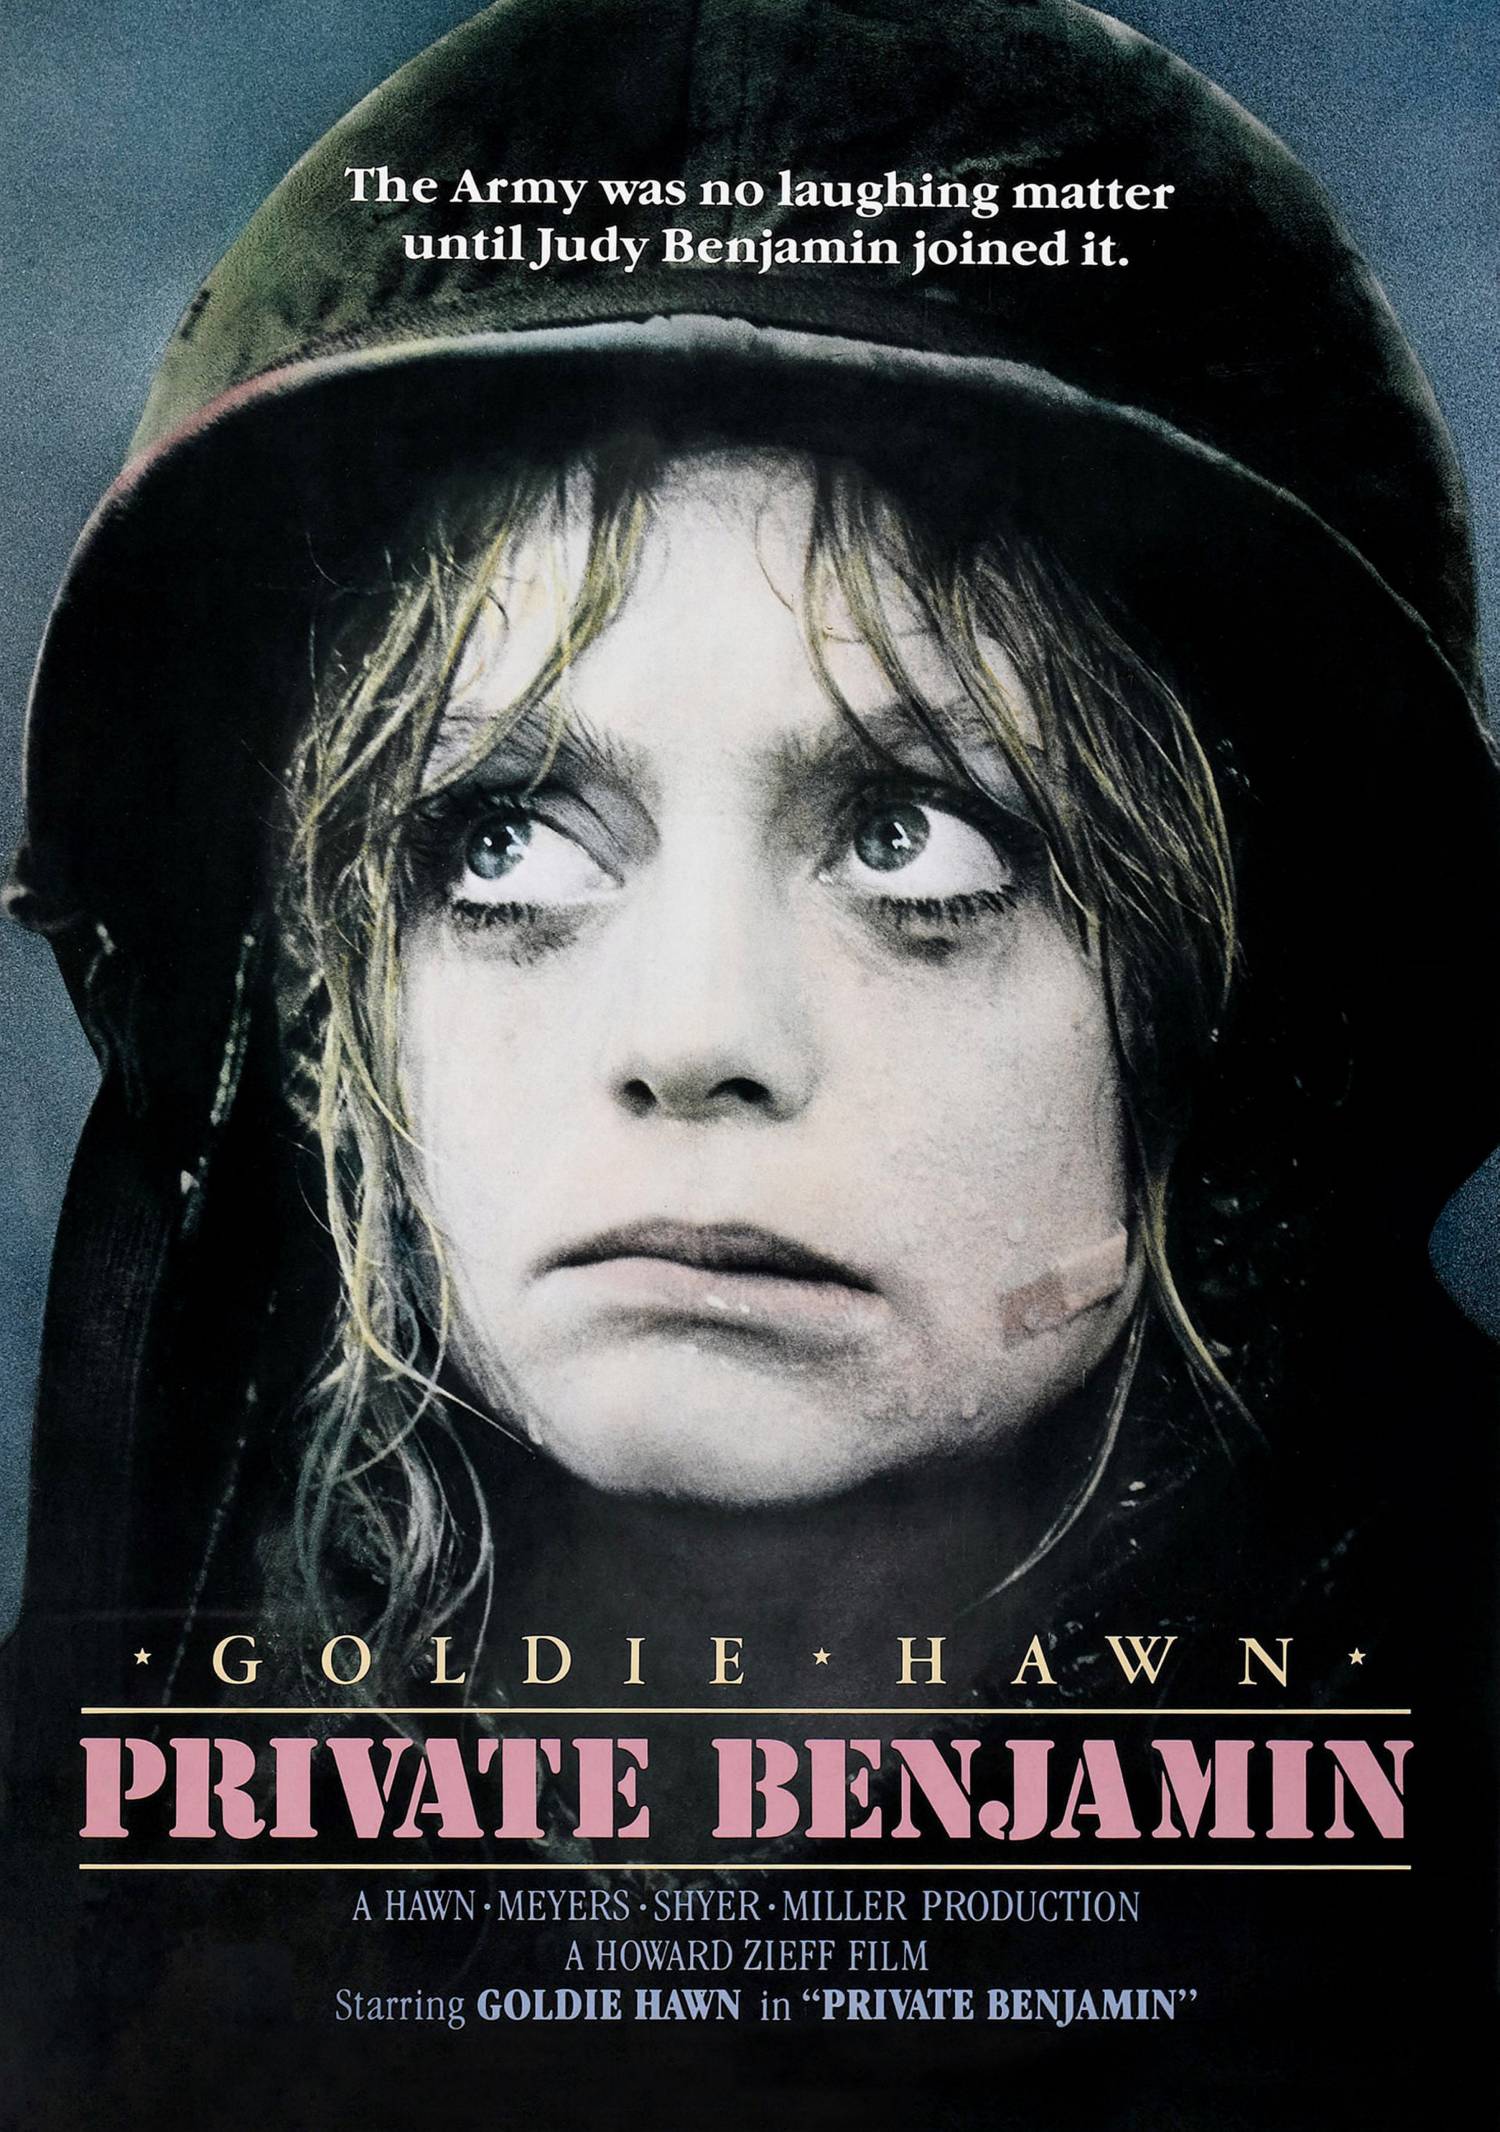 "Private Benjamin", 1980 American comedy film starring Goldie Hawn. 